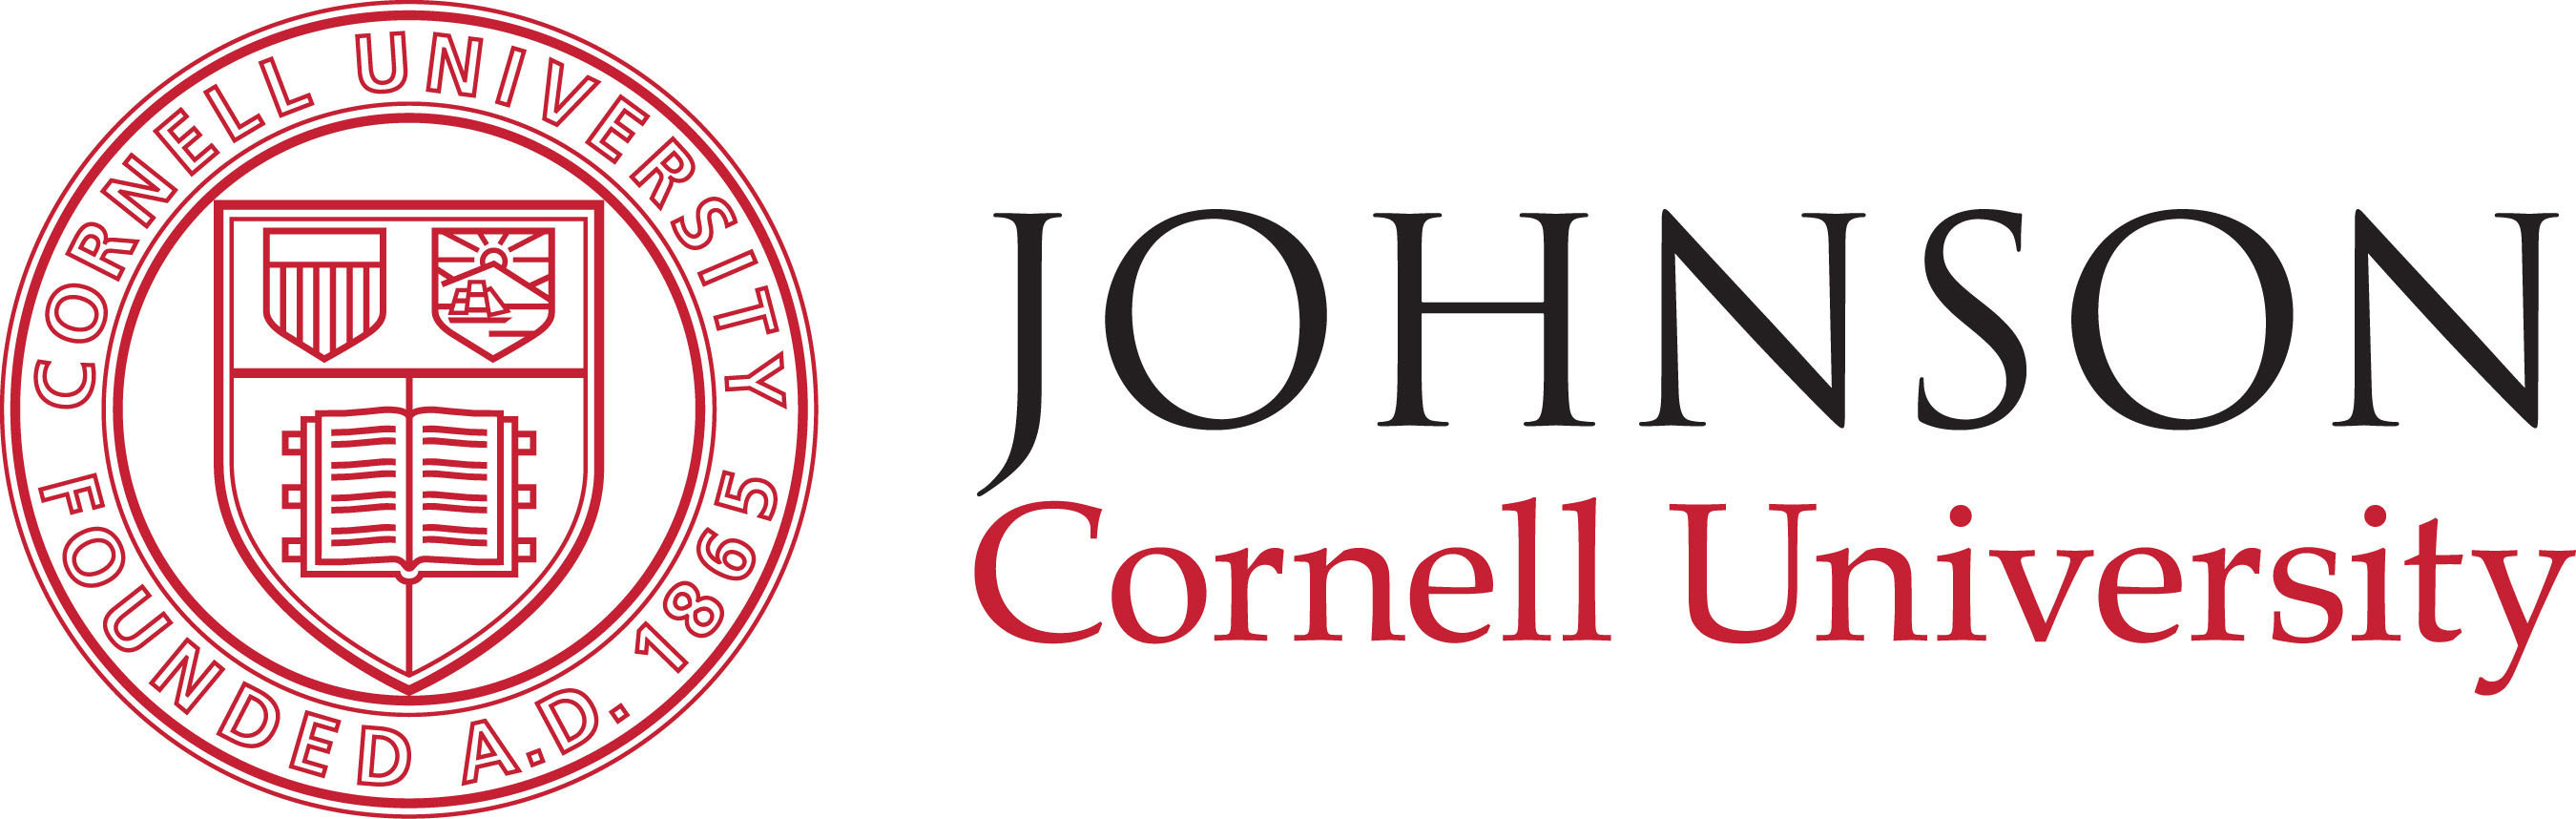 Johnson School at Cornell University logo.